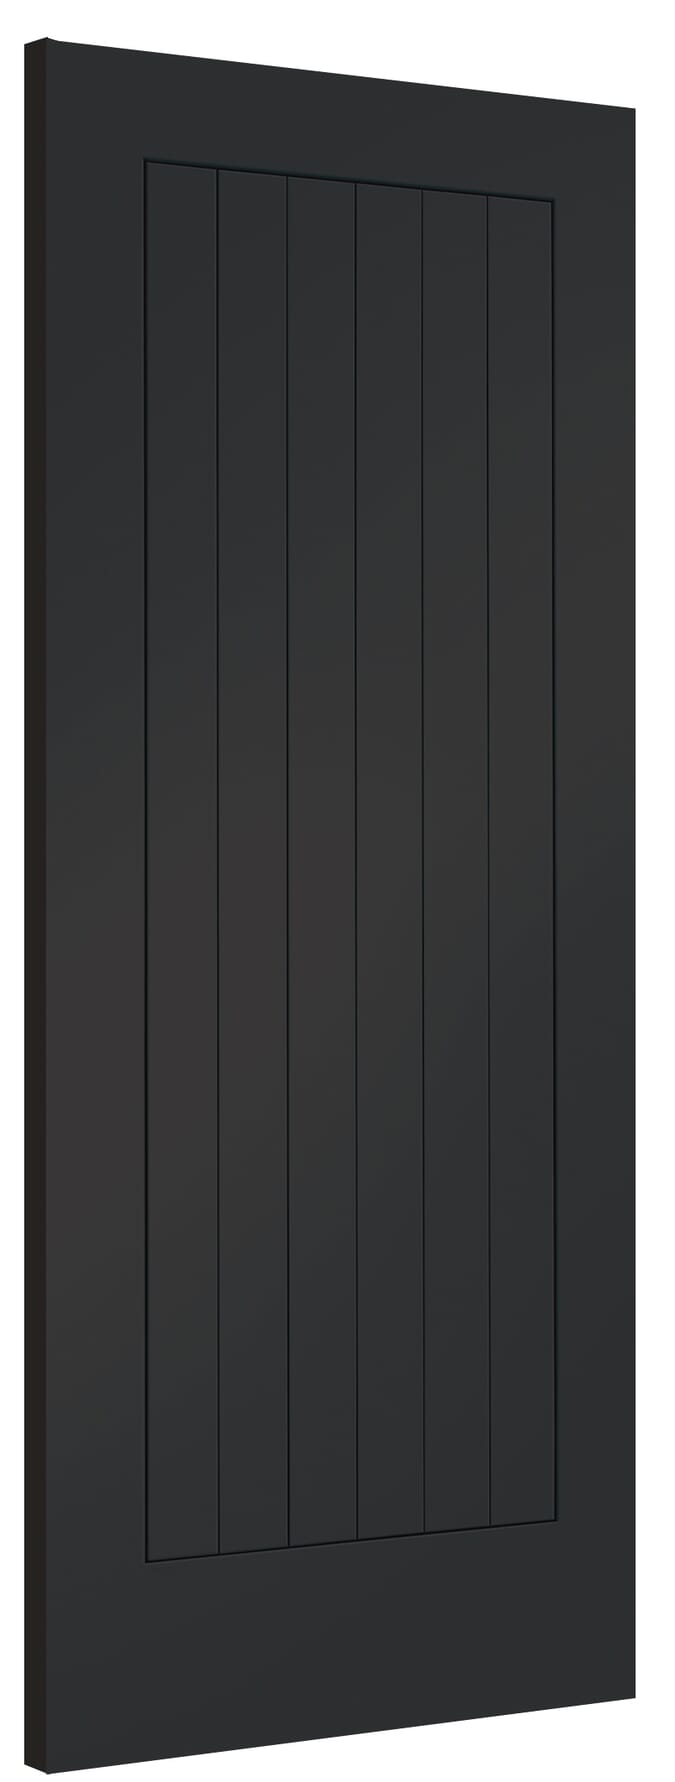 686x1981x44mm (27") Suffolk Cosmos Black Internal Doors